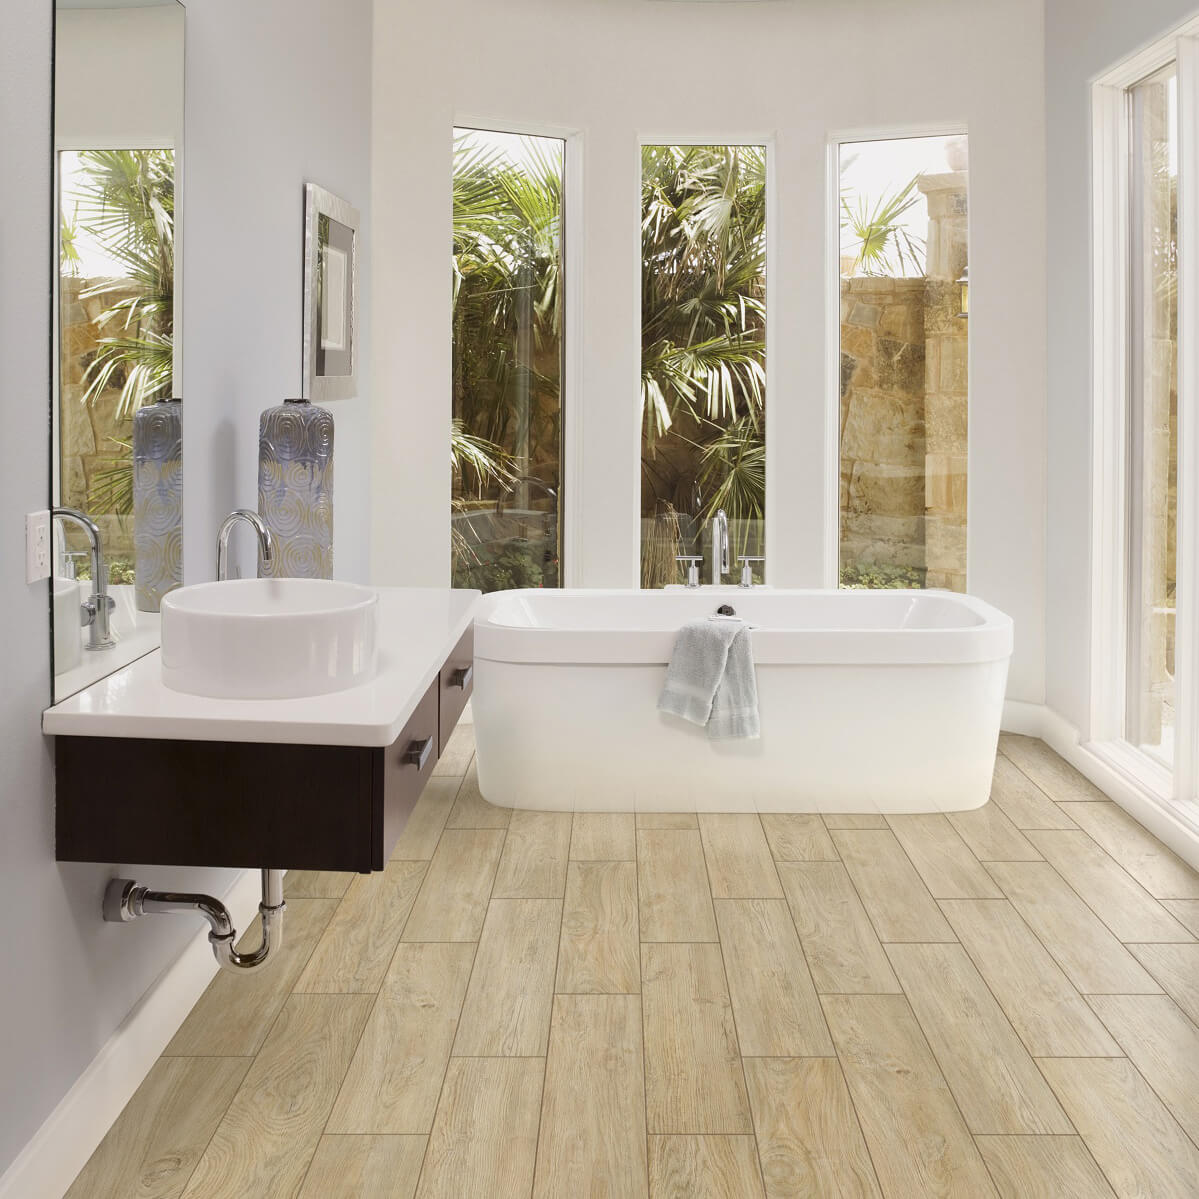 Floor mirror side interior with bathtub | Floor to Ceiling Sycamore